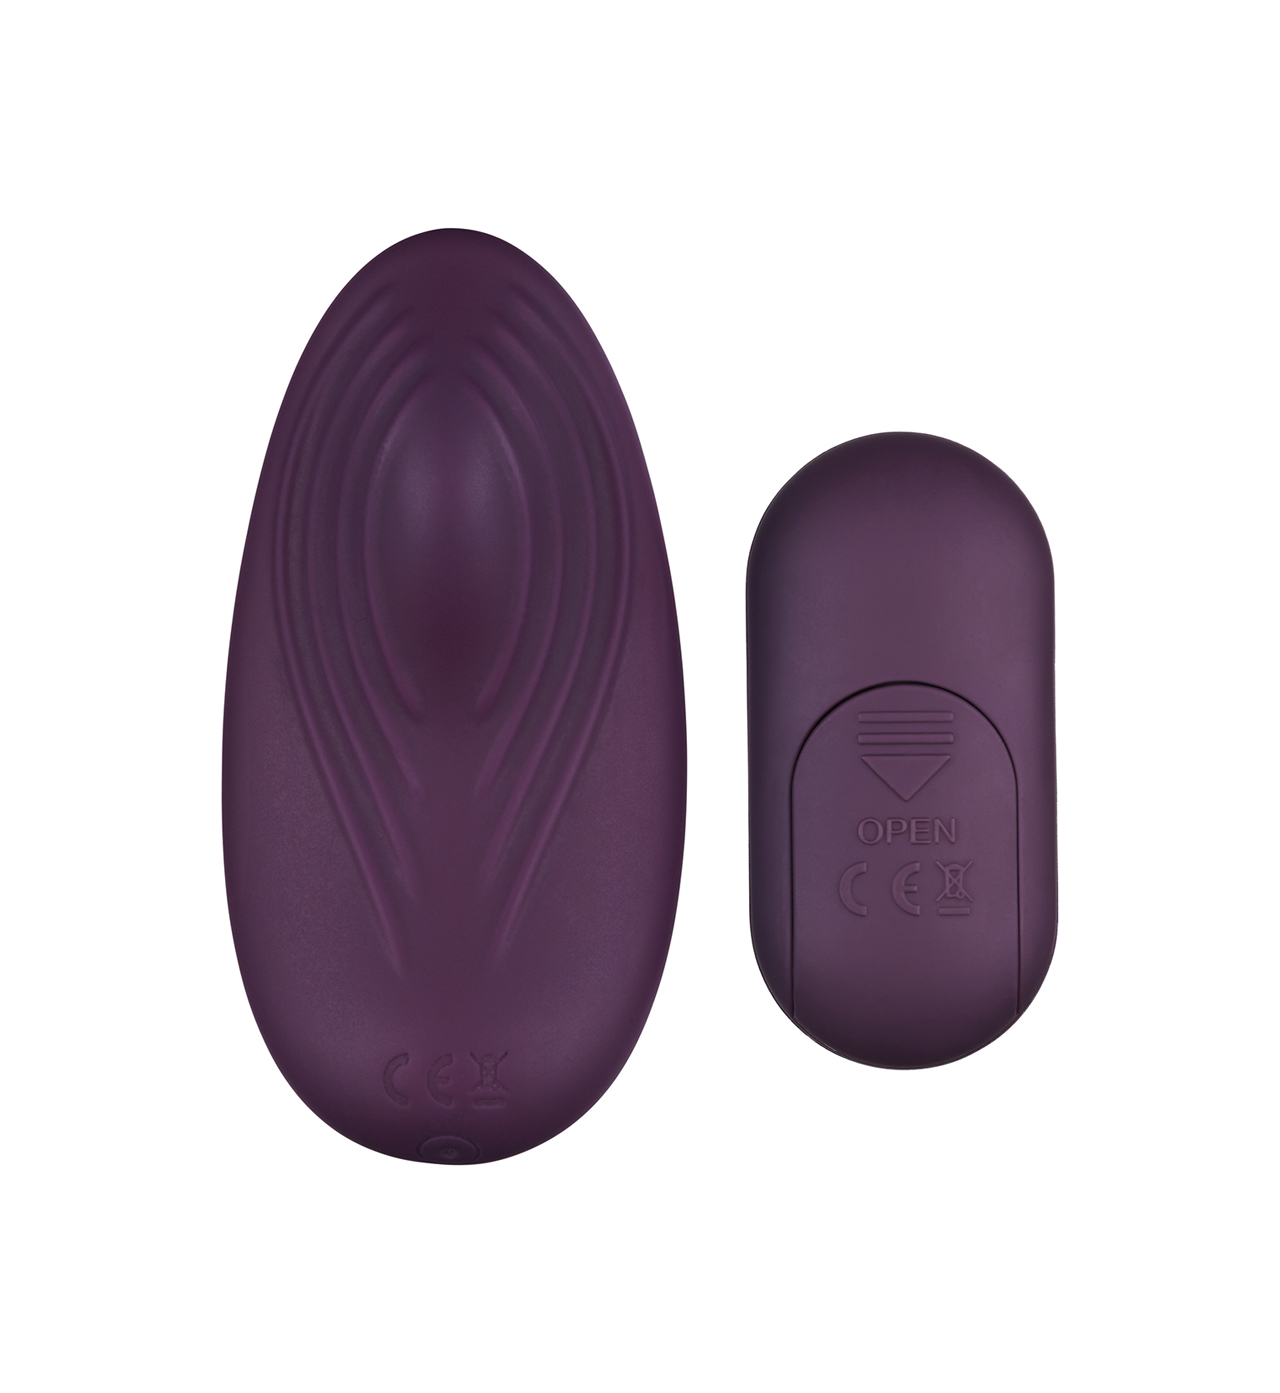 Keep Me Close - Discreet panty vibrator with remote control  - RFSU 